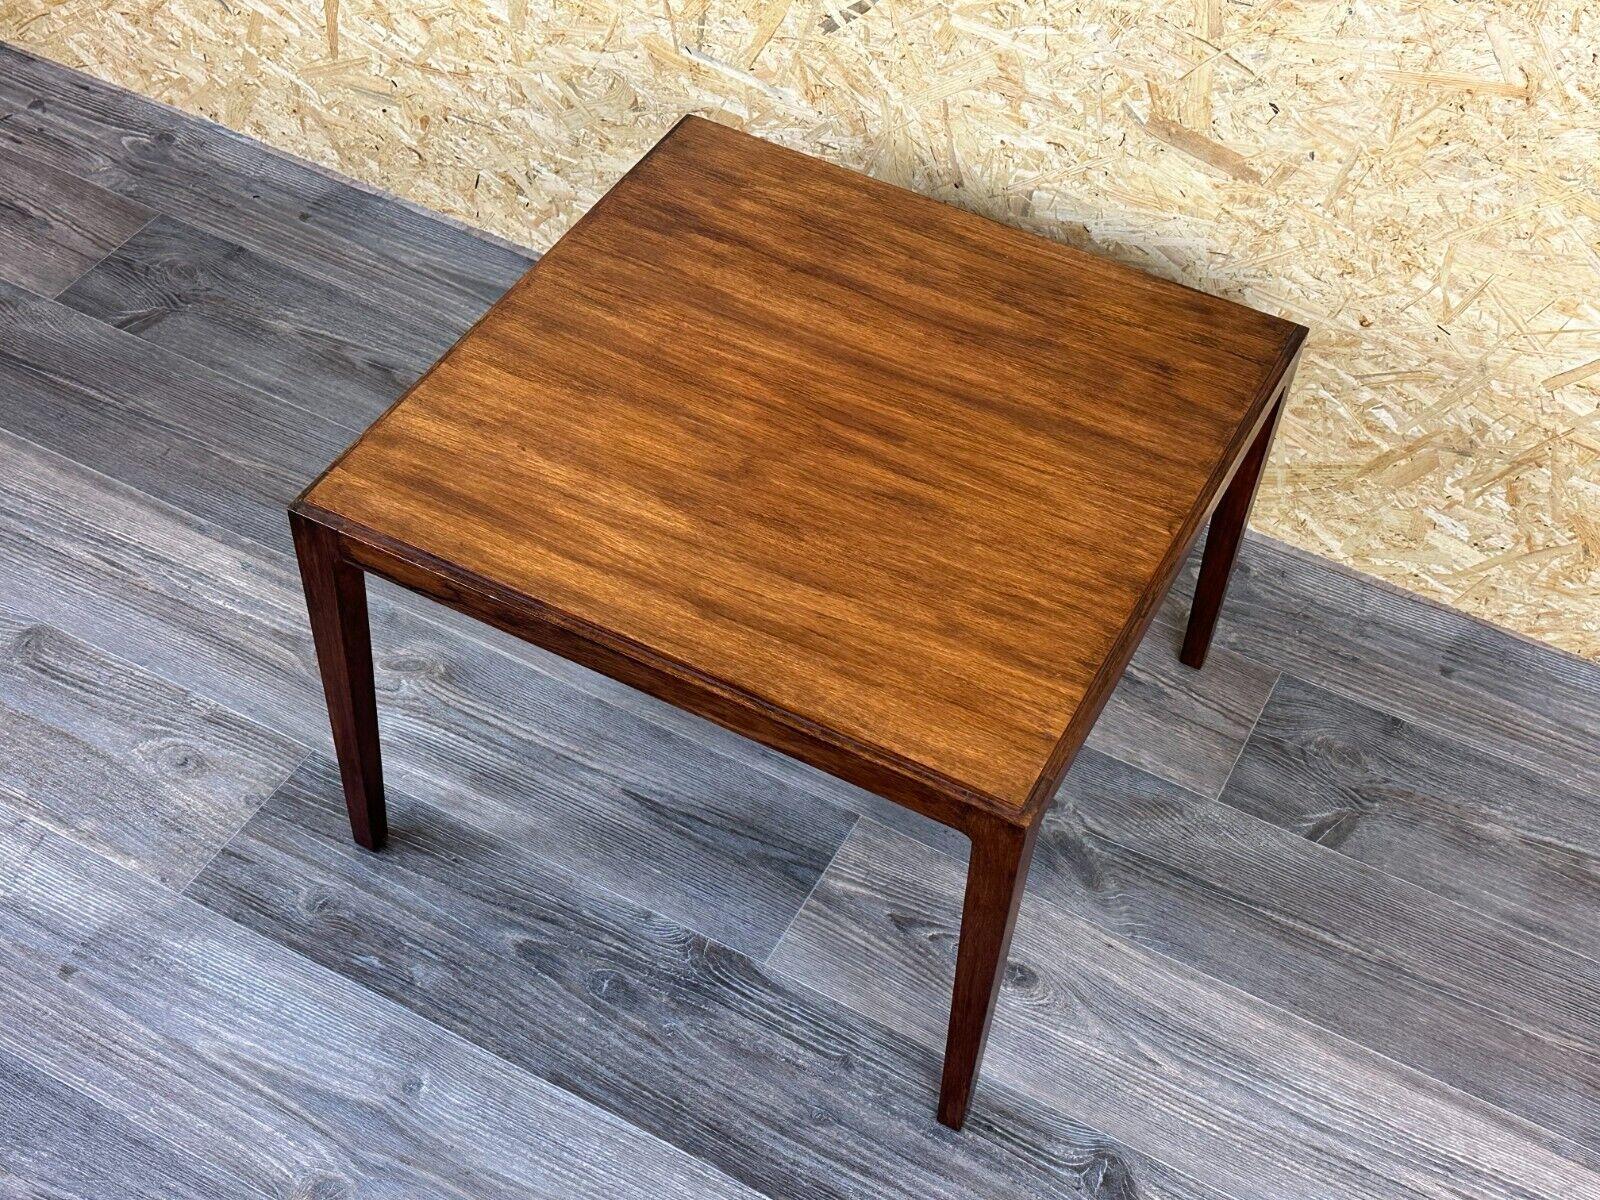 60s 70s Teak Table Side Table Coffee Table Danish Design Denmark For Sale 1